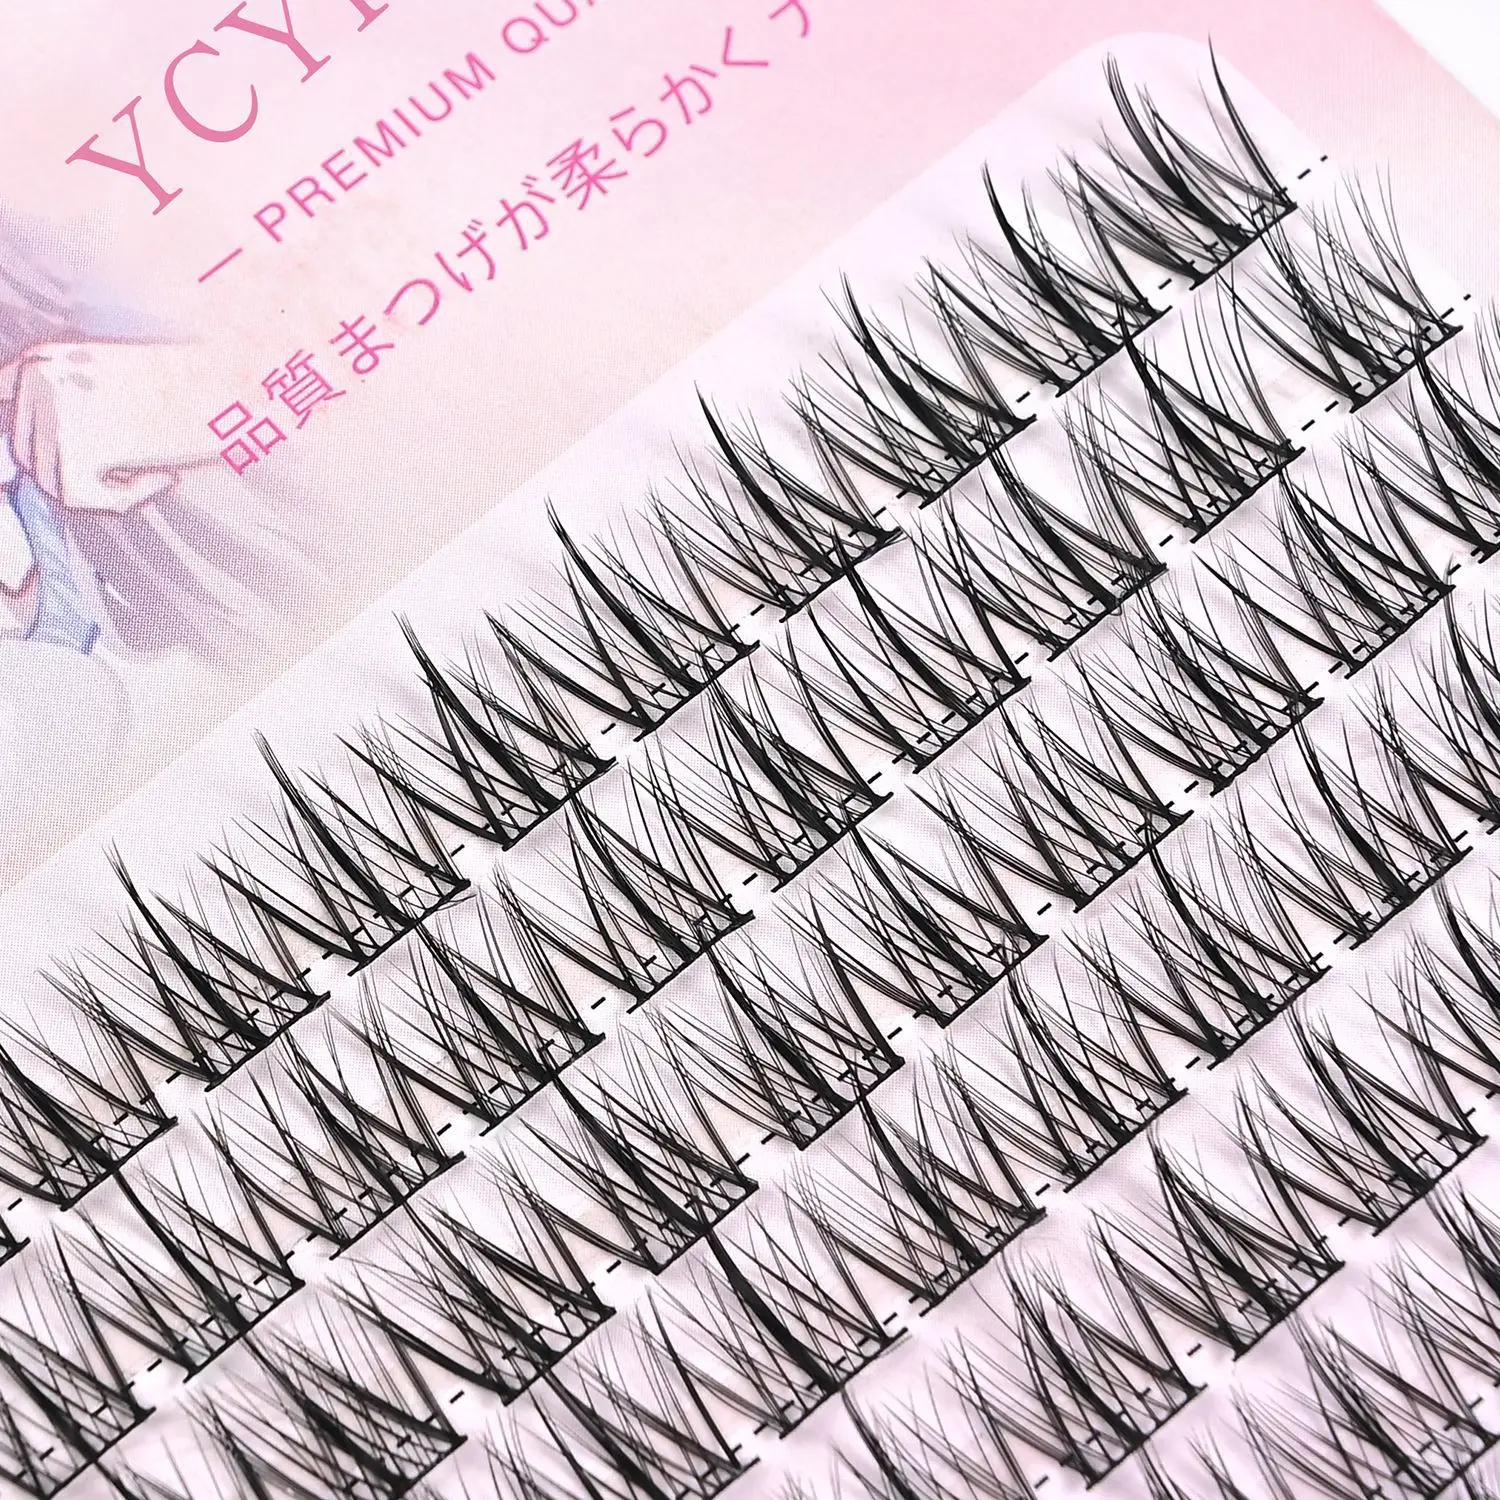 

cluster lashes natural long wispy wholesale manga makeup DIY individual mink false eyelashes extension cat eye